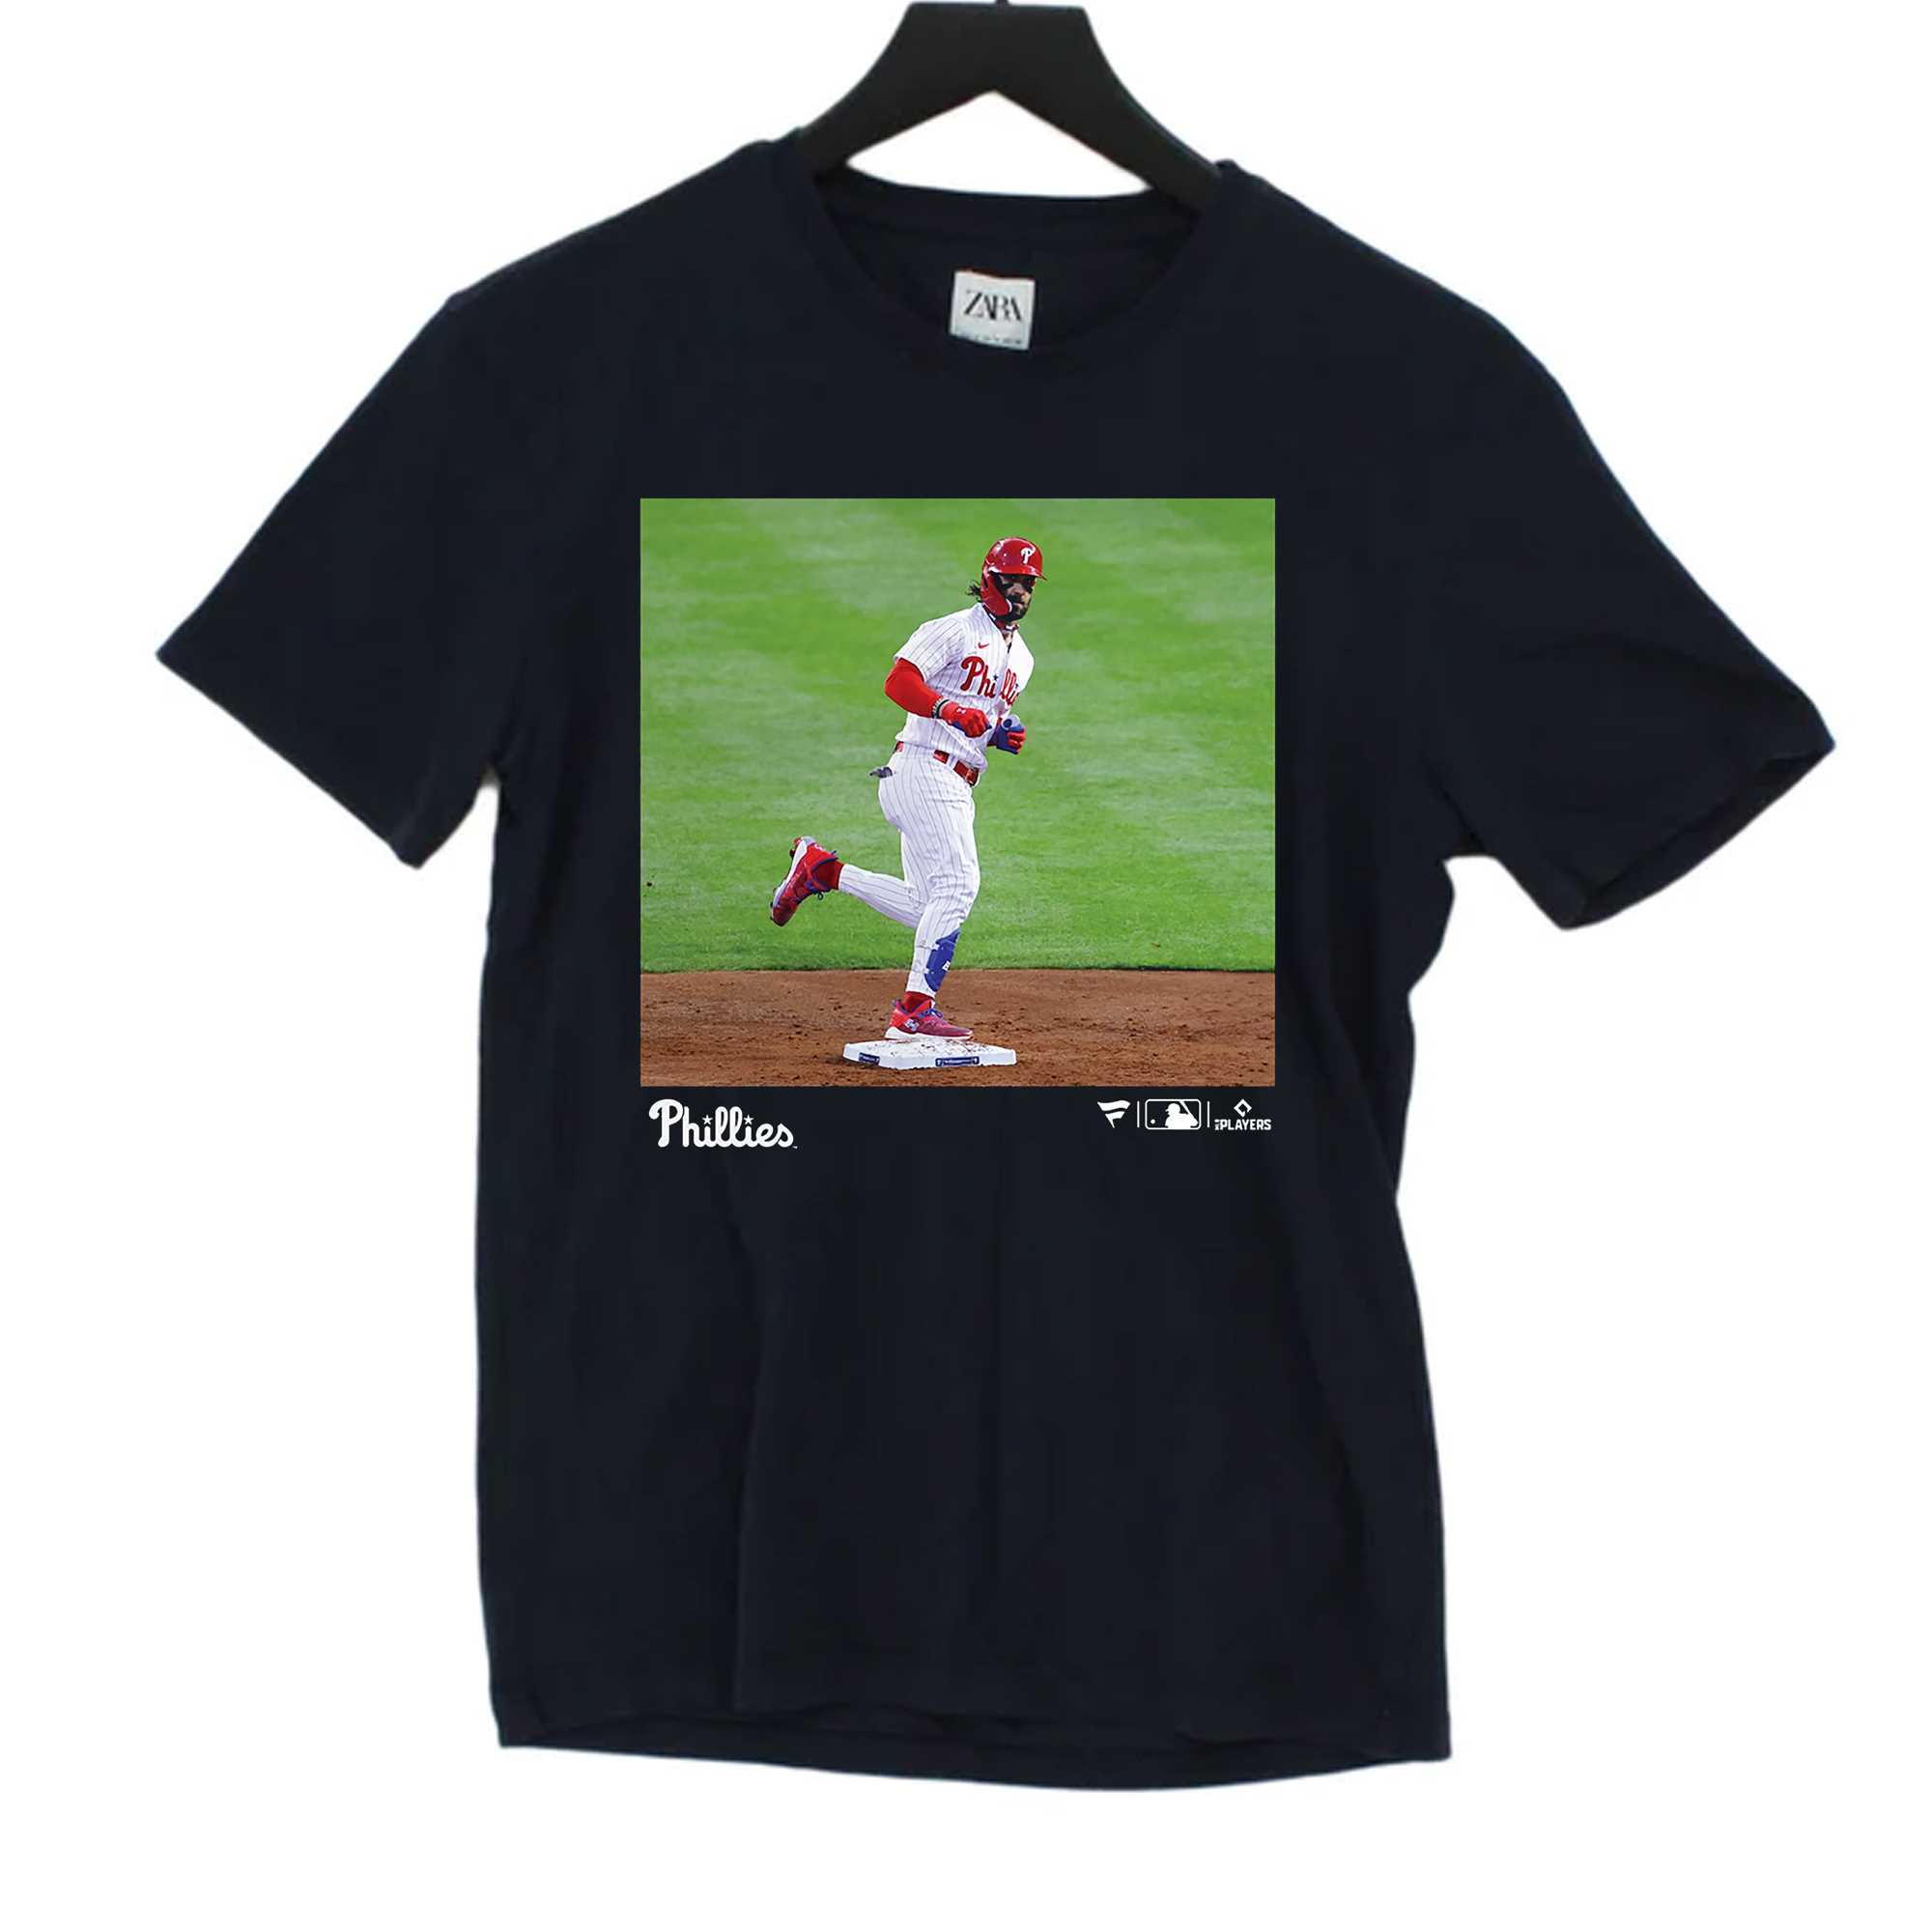 Phillies Atta Boy Bryce Harper Shirt